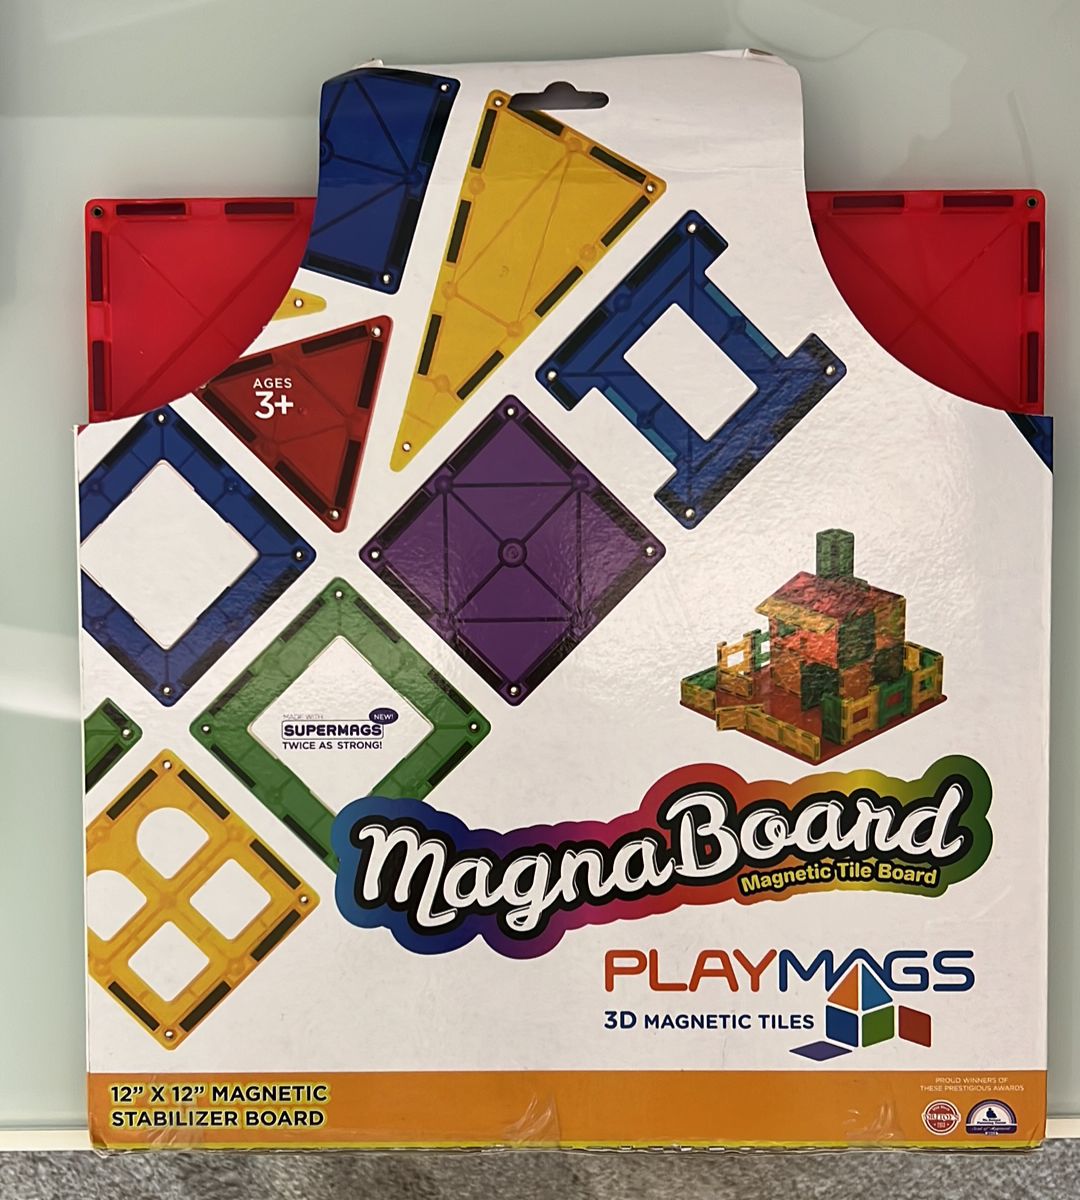 Playmags Building Board (1 piece)